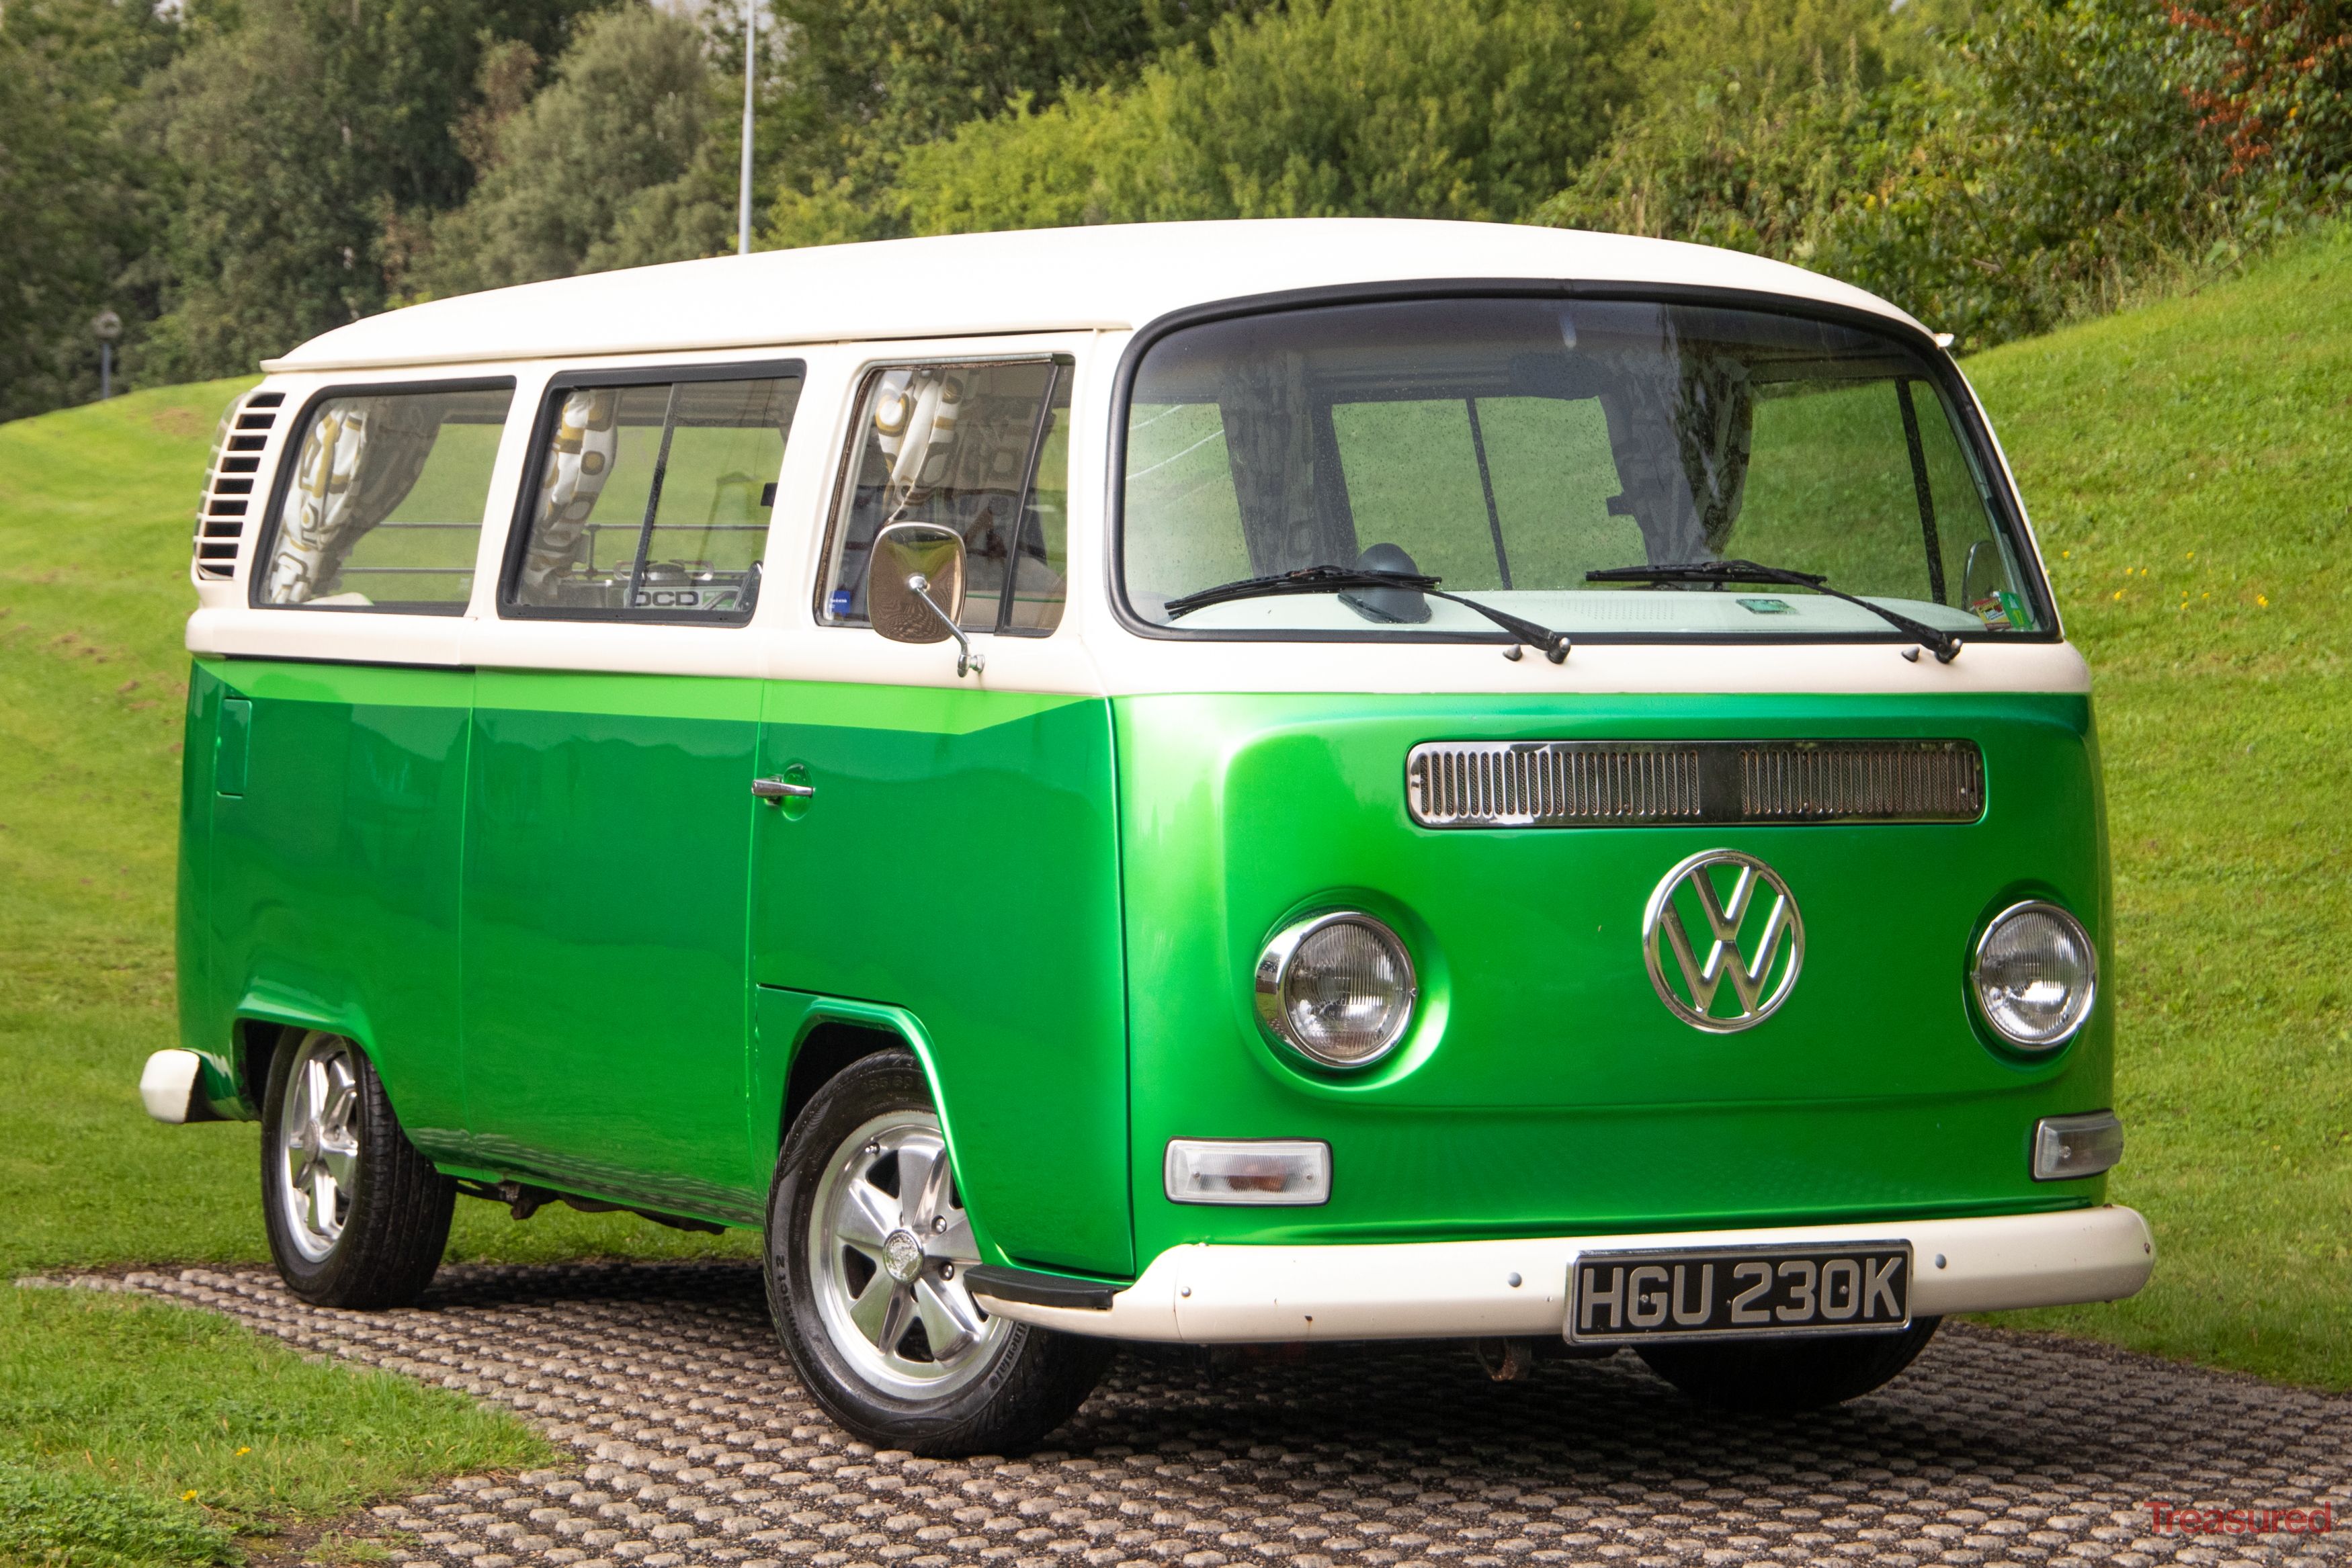 For Sale: A Restored Volkswagen Type 2 Westfalia Camper